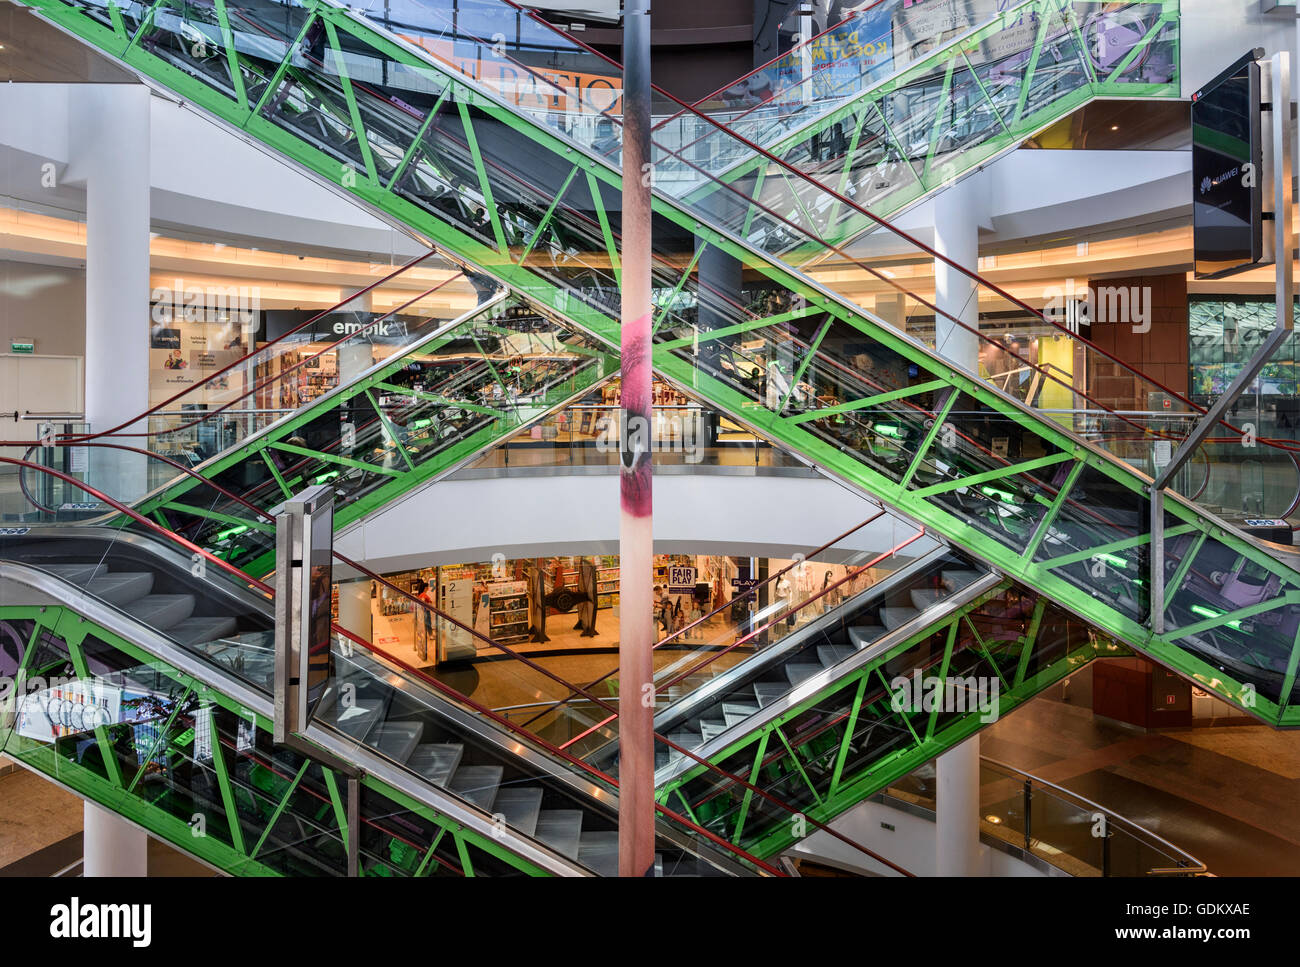 Escalator in Polish shopping mall Stock Photo